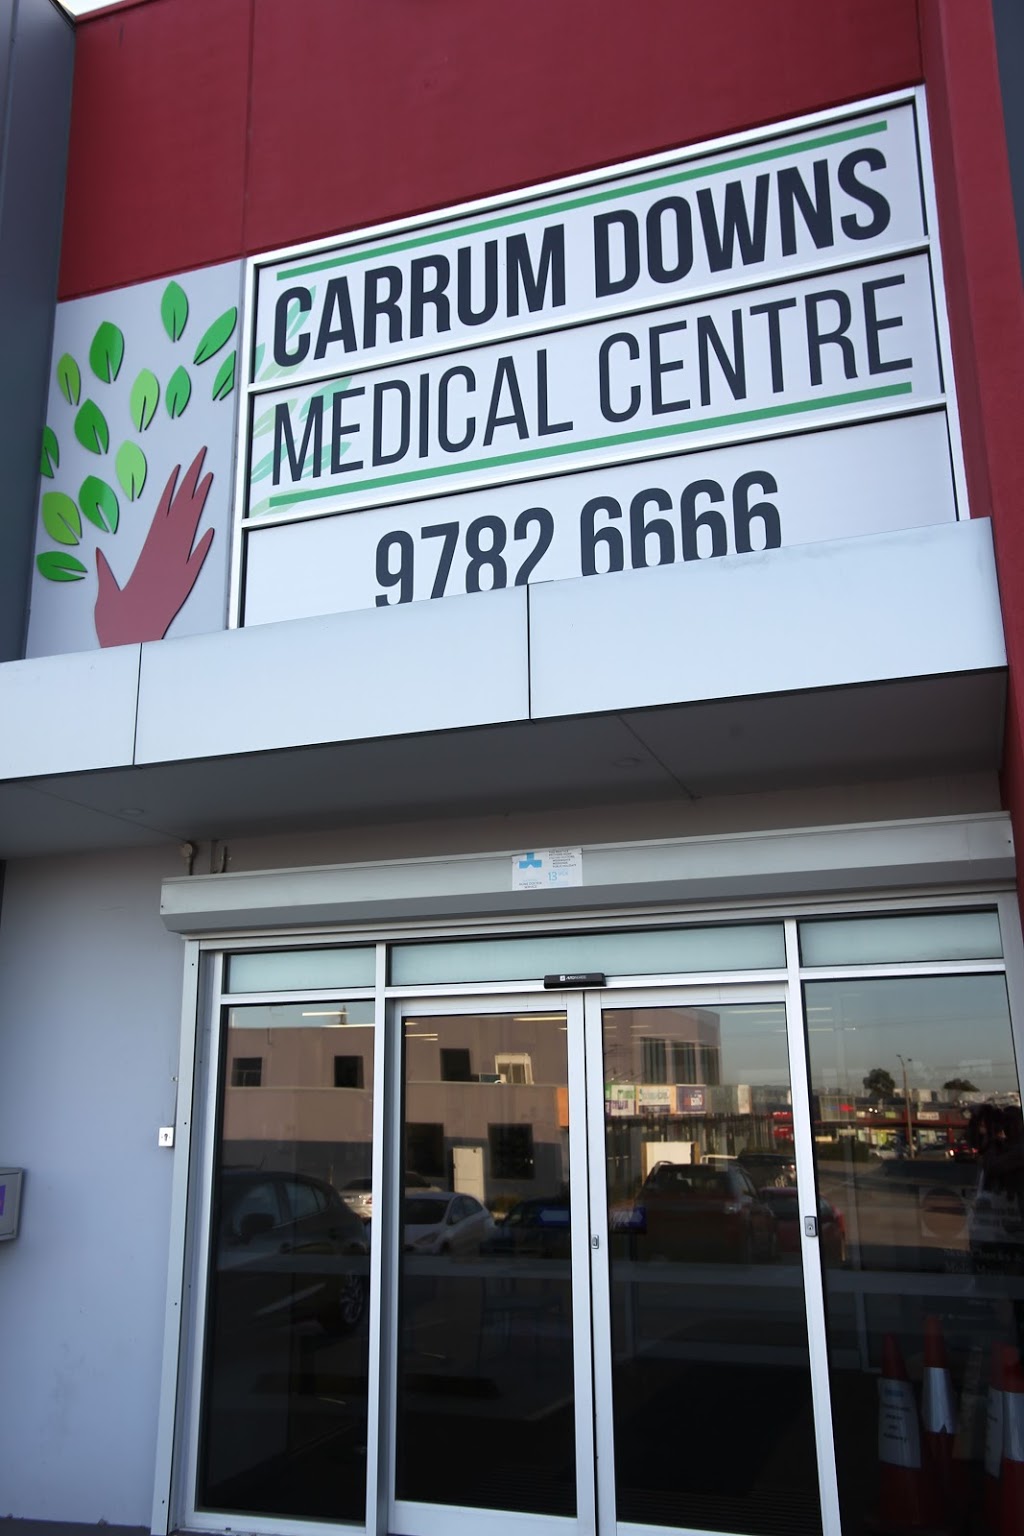 Carrum Downs Medical Centre - Dr Elena Sigalov | hospital | 113A Hall Rd, Carrum Downs VIC 3201, Australia | 397826666 OR +39 397 826 666